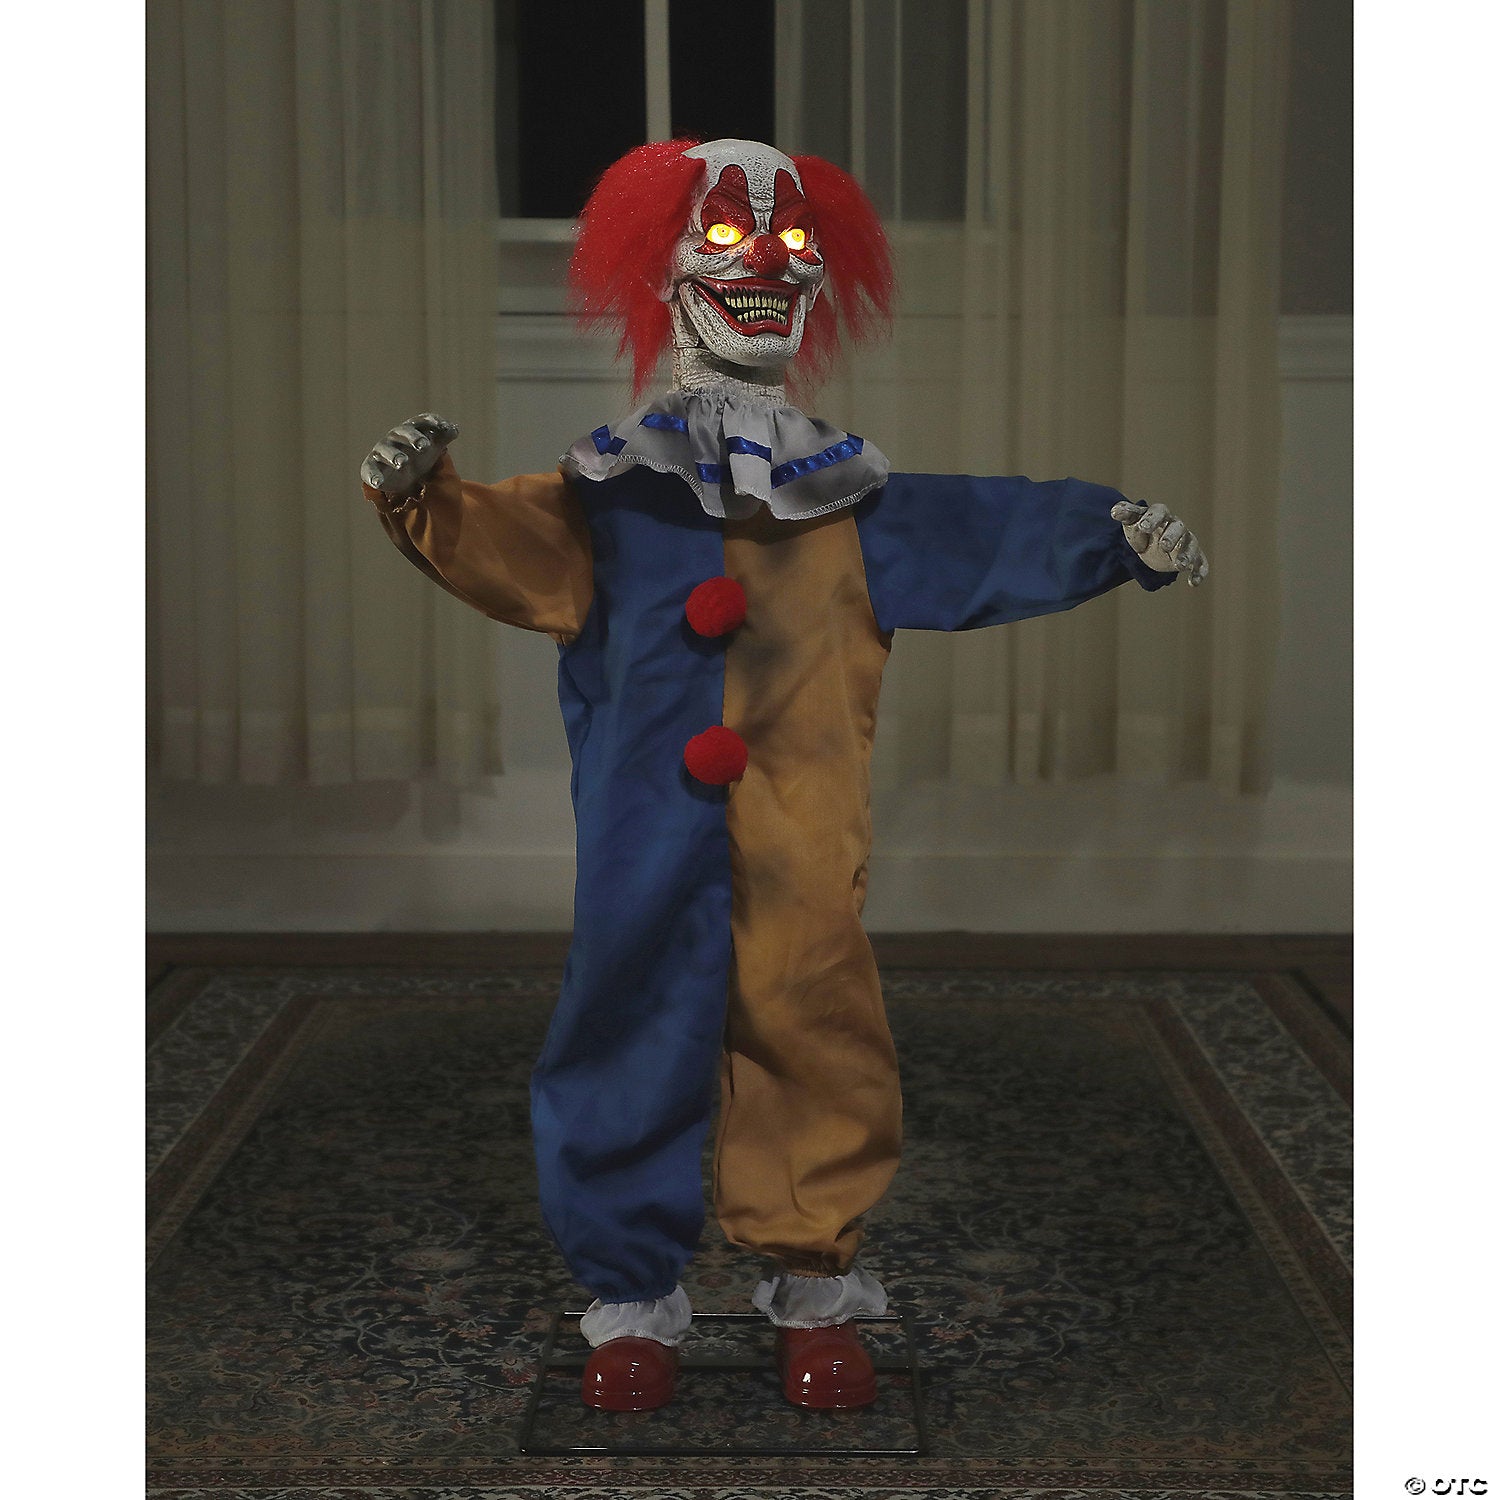 Halloween 36" Little Top Clown Animated Prop